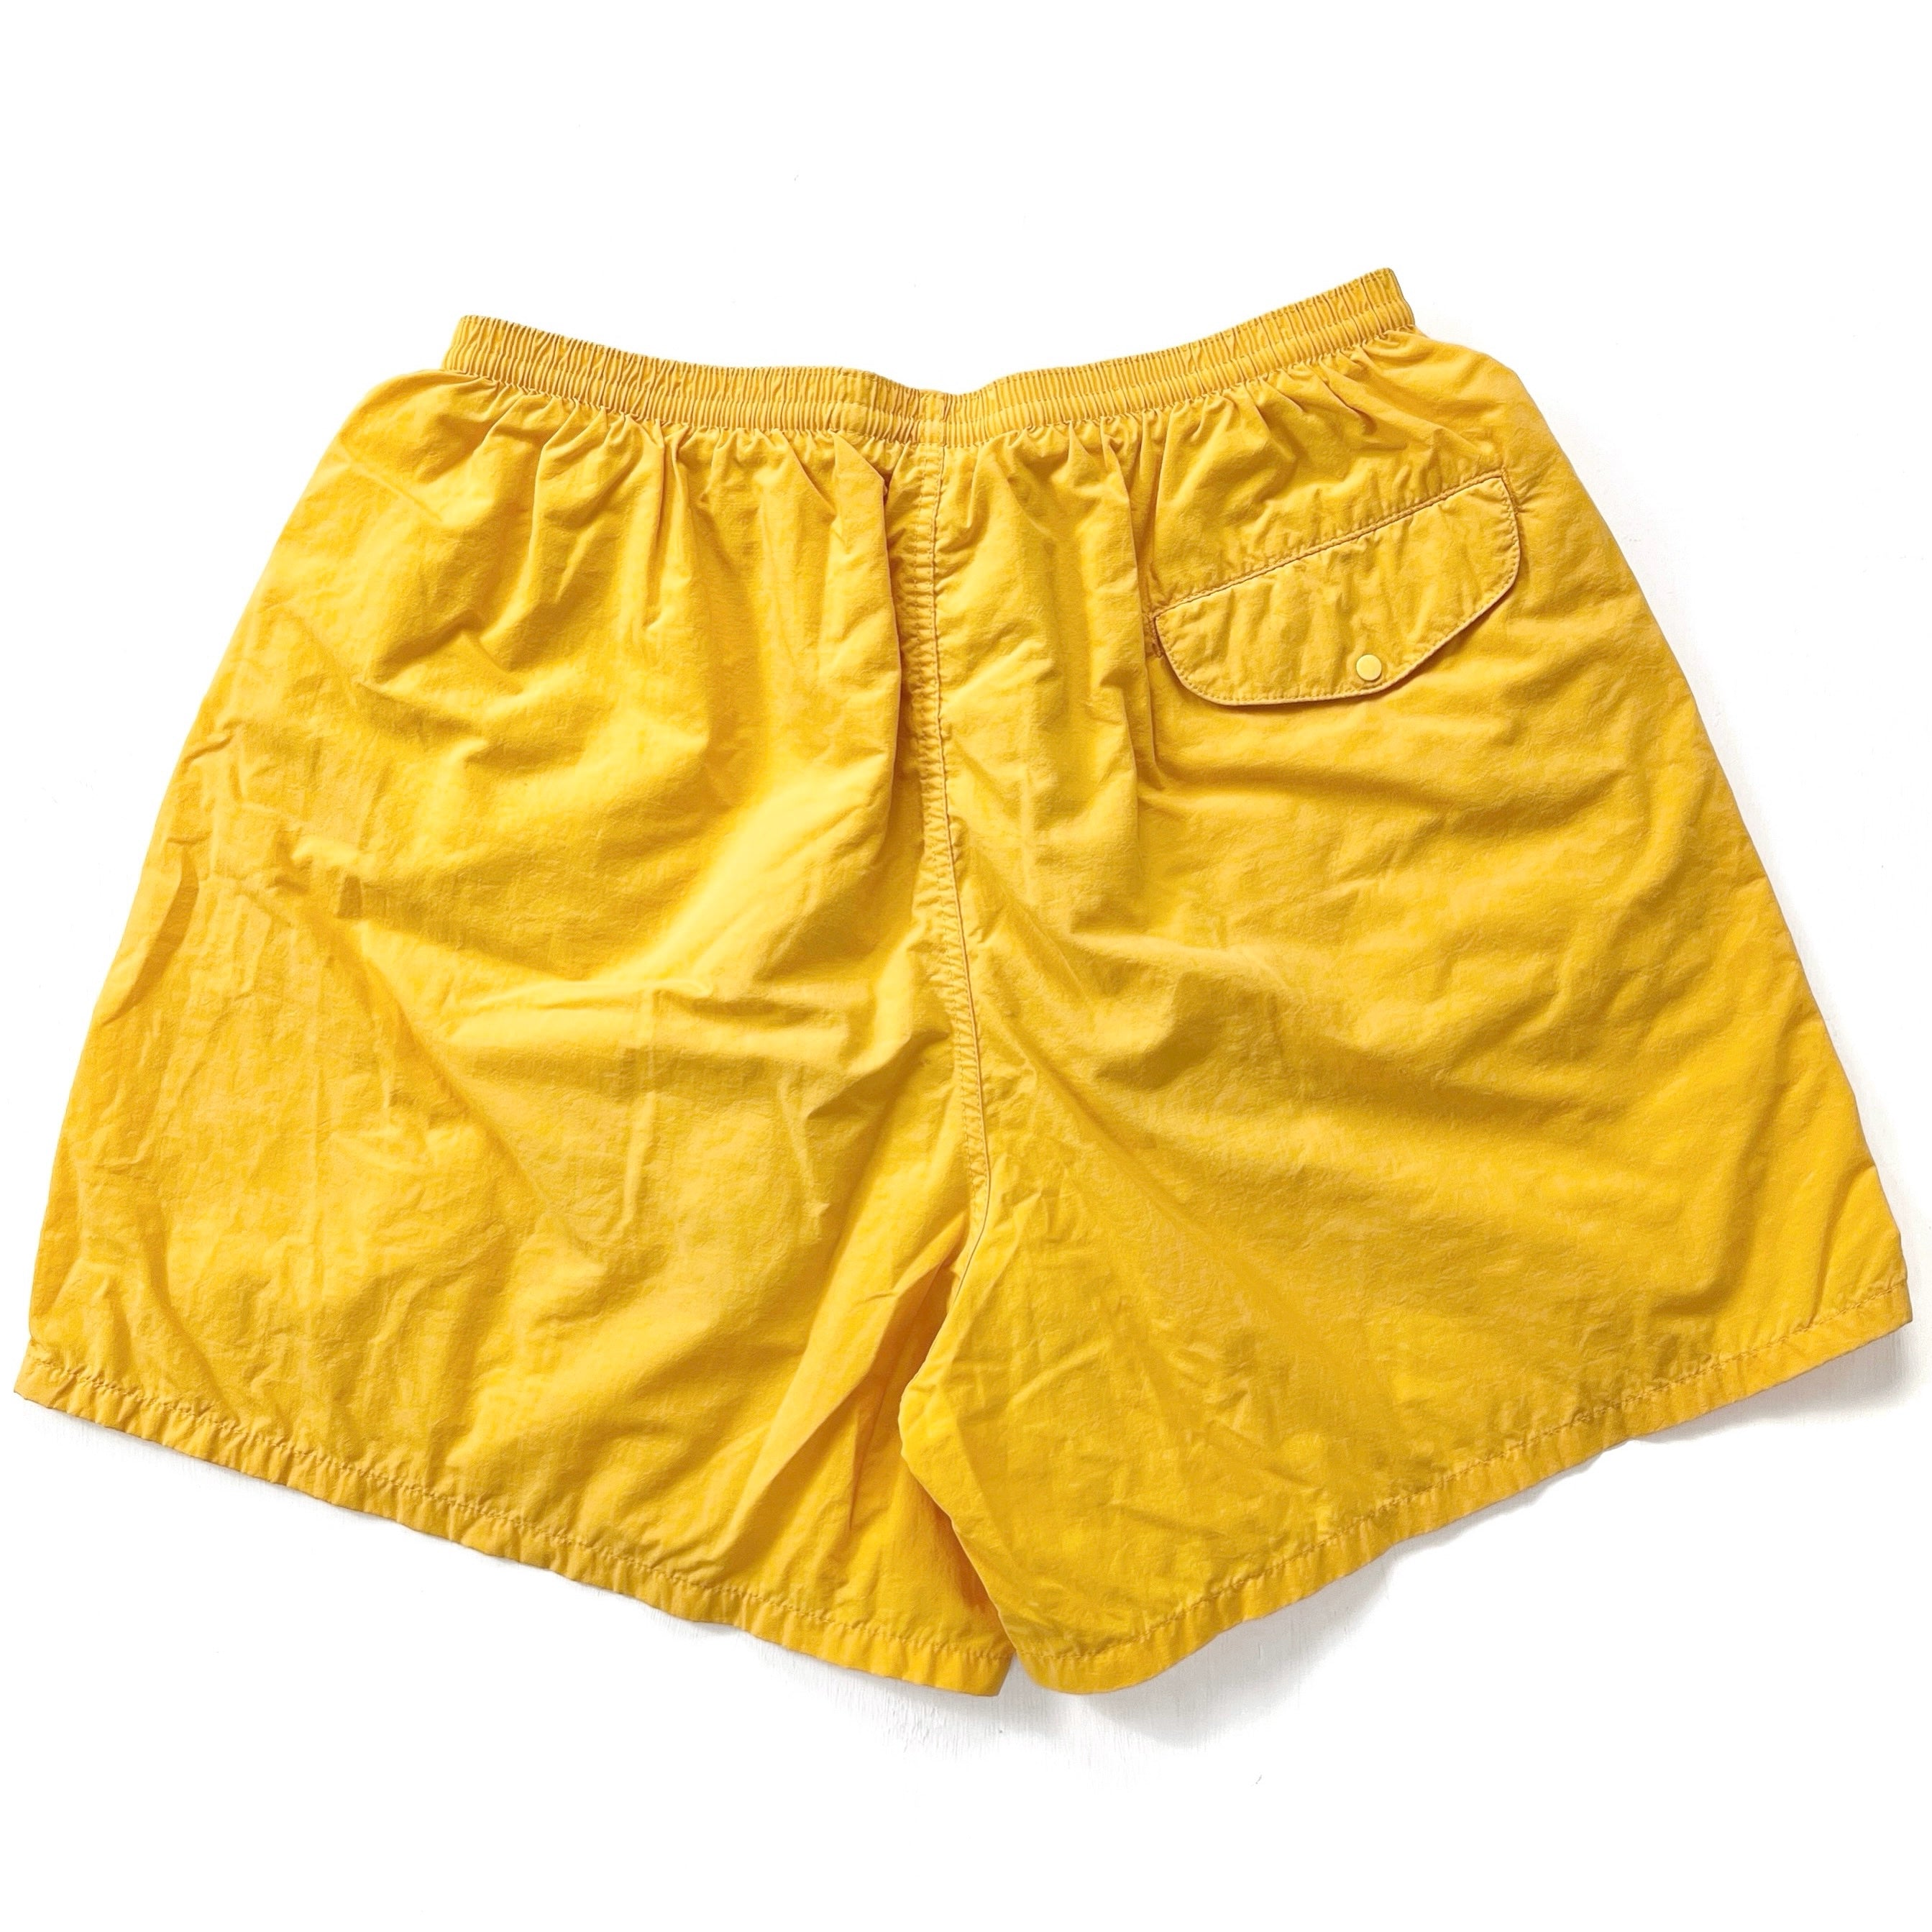 2003 Patagonia Mens 5” Nylon Baggies Shorts, Tangerine (L)